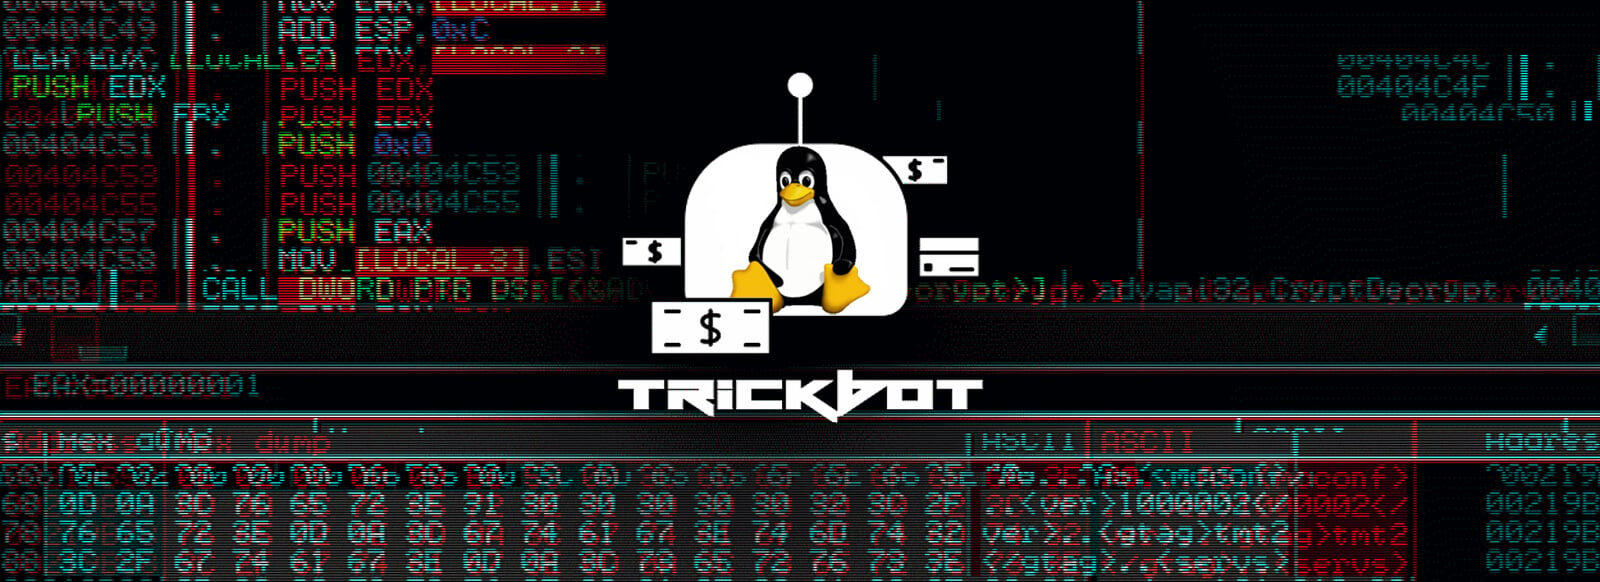 TrickBot Linux